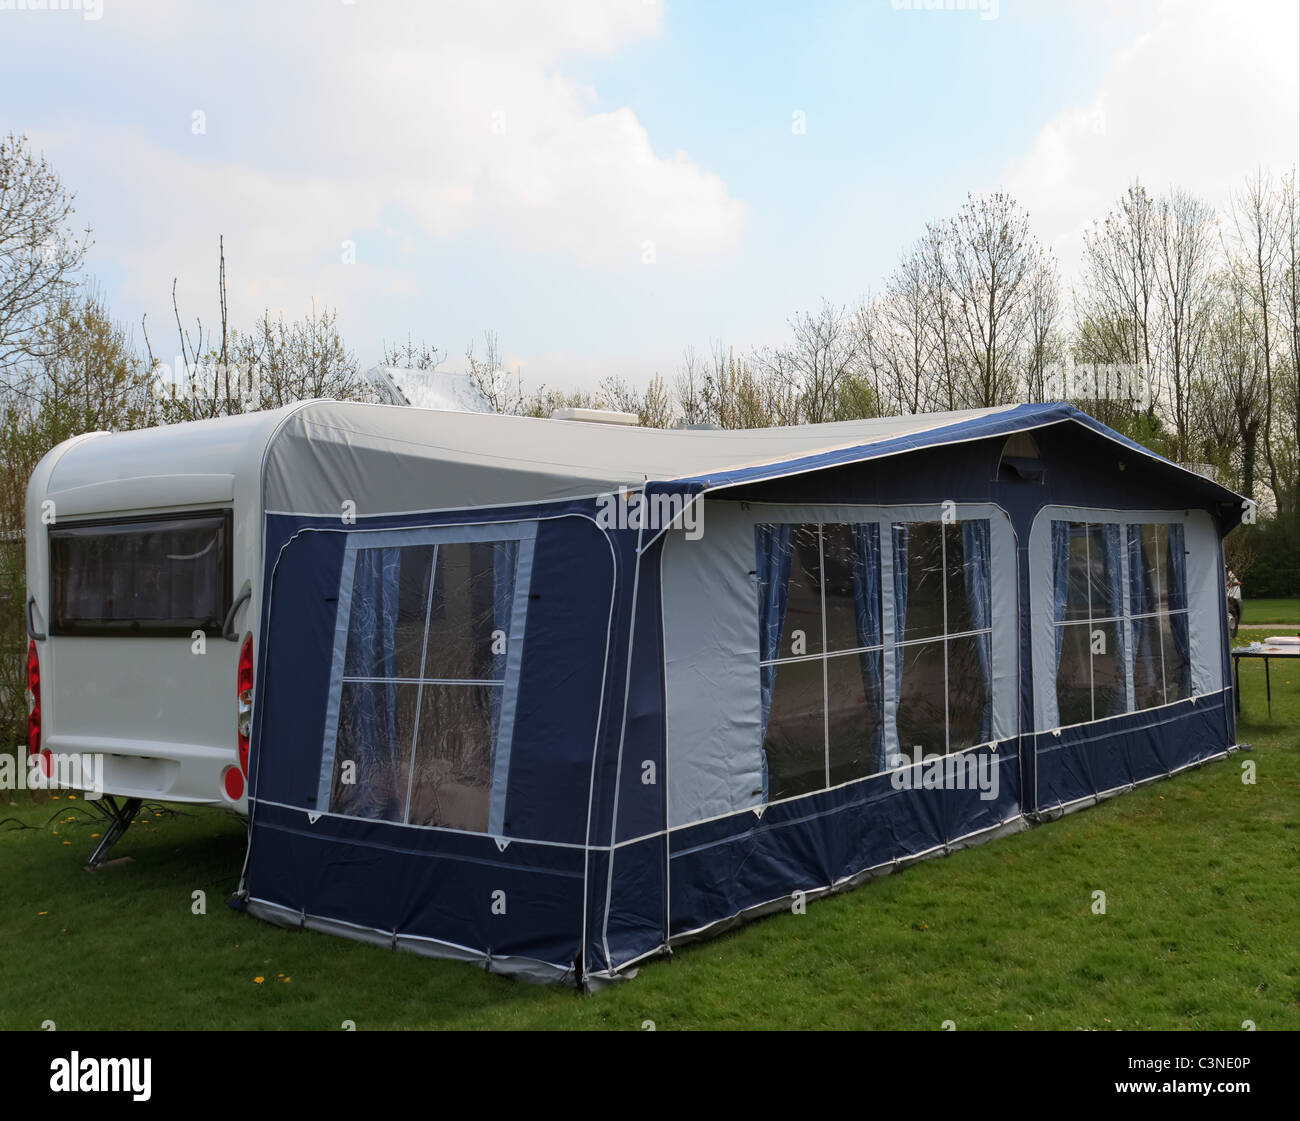 Vooruitzien Vrijgekomen Subtropisch long trailer caravan with awning tent with blue curtains Stock Photo - Alamy